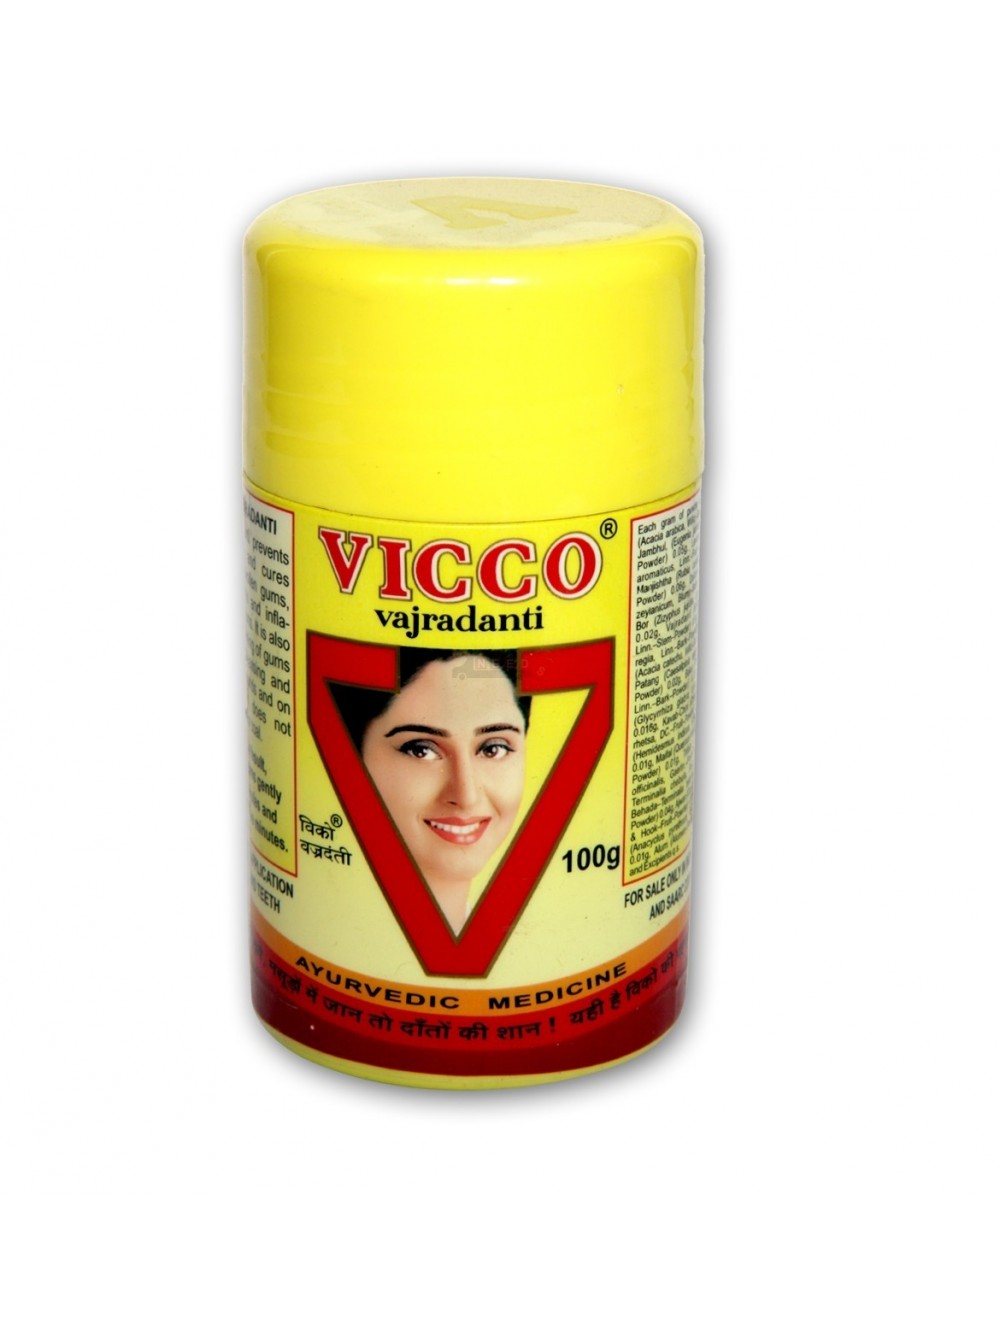 VICCO Vajradanti Toothpowder (Зубной порошок Ваджраданти, Викко), 100 г.